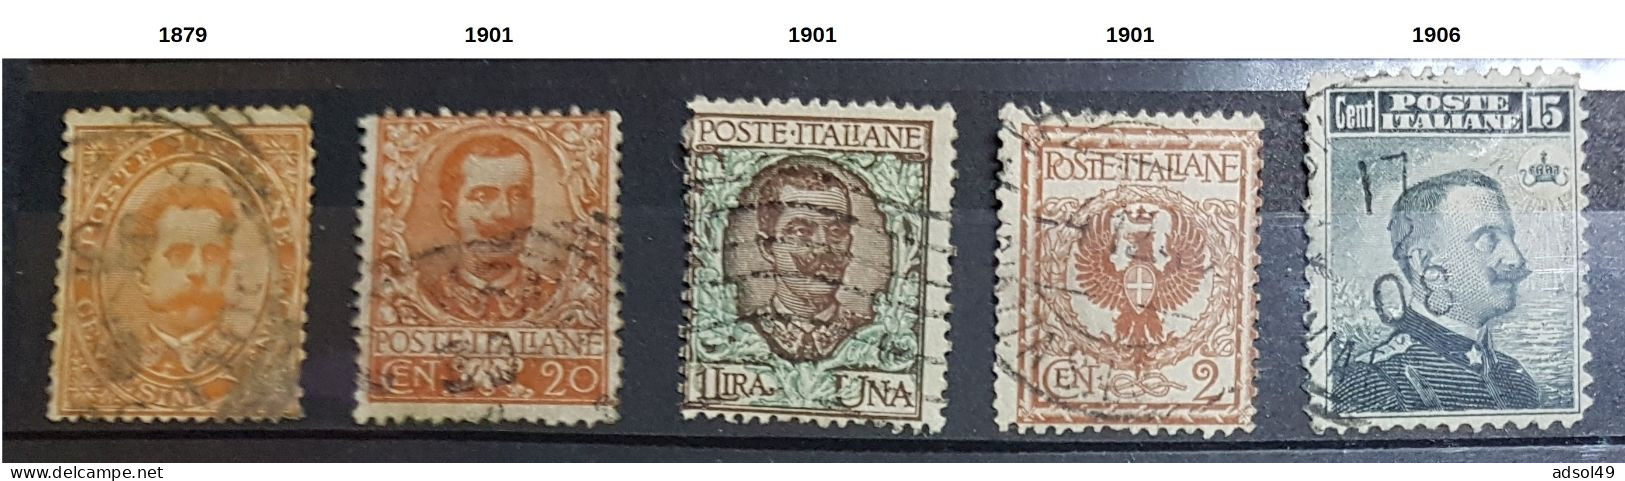 Italia 1879 Fino 1906 - 5 Francobolli Usati / 1879 à 1906 - 5 Timbres Oblitérés - Used